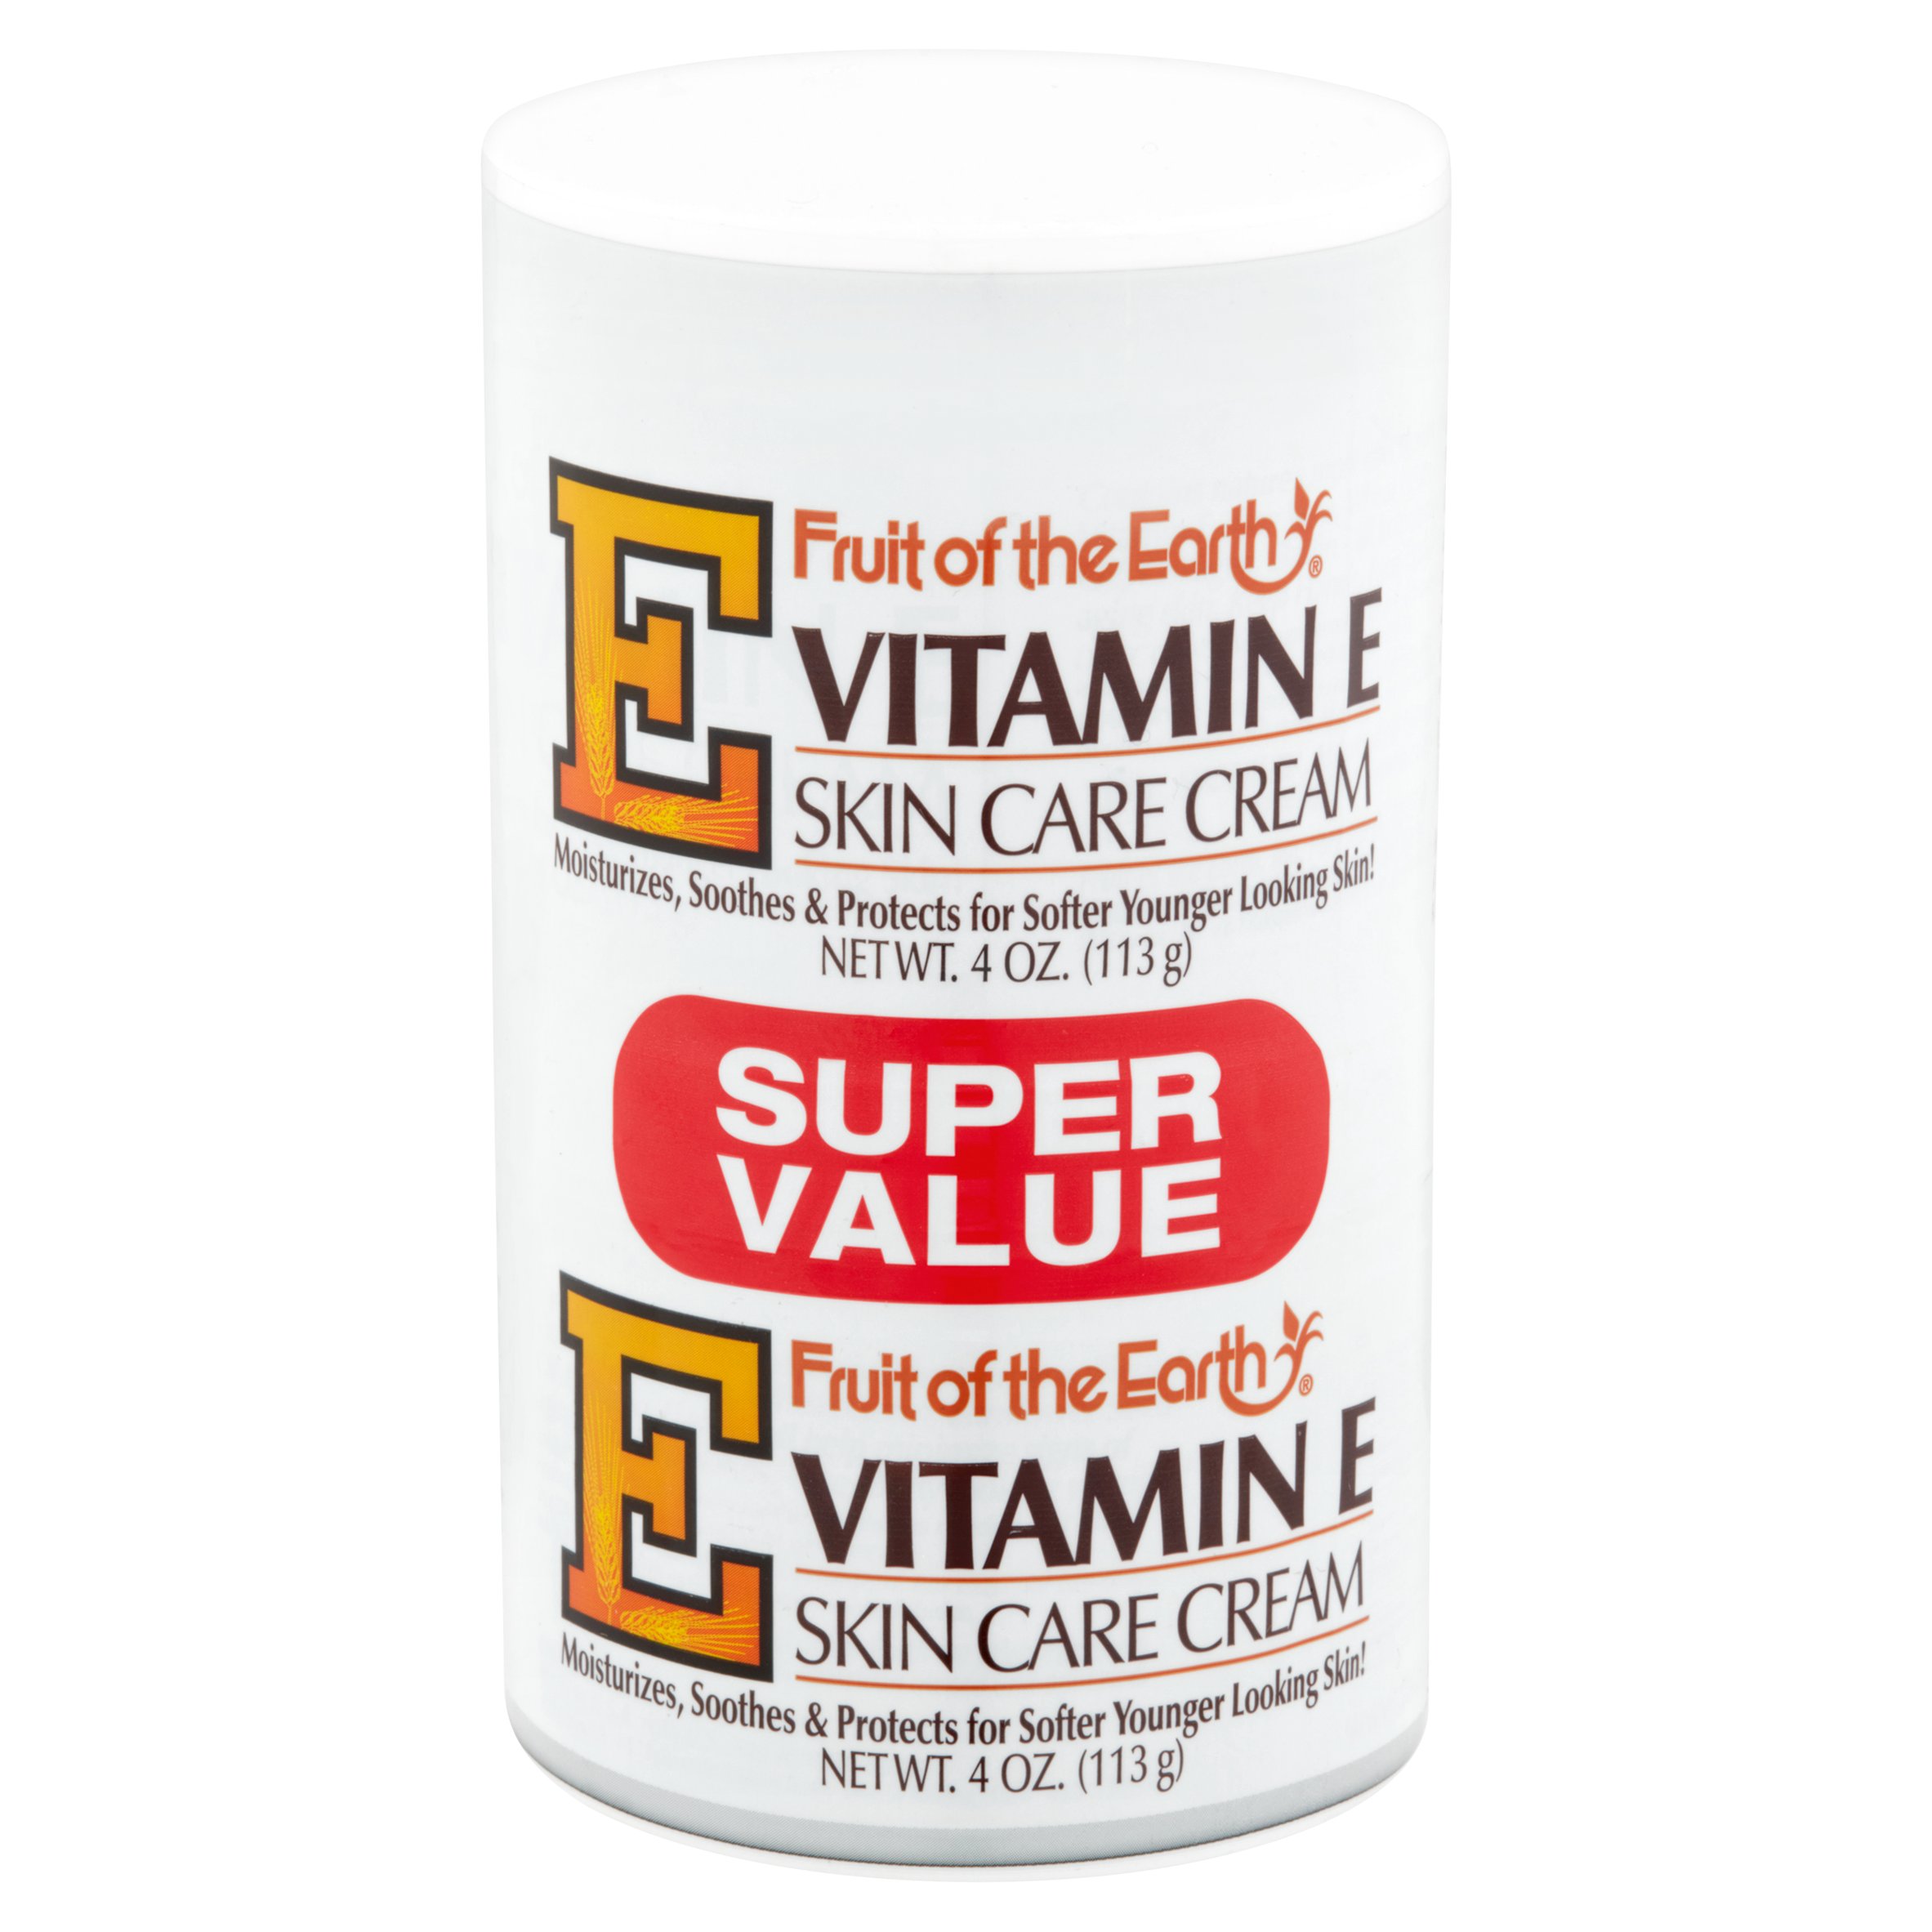 Fruit of the Earth Vitamin E Skin Care Cream Super Value, 4 Oz., 2 pack - image 4 of 5